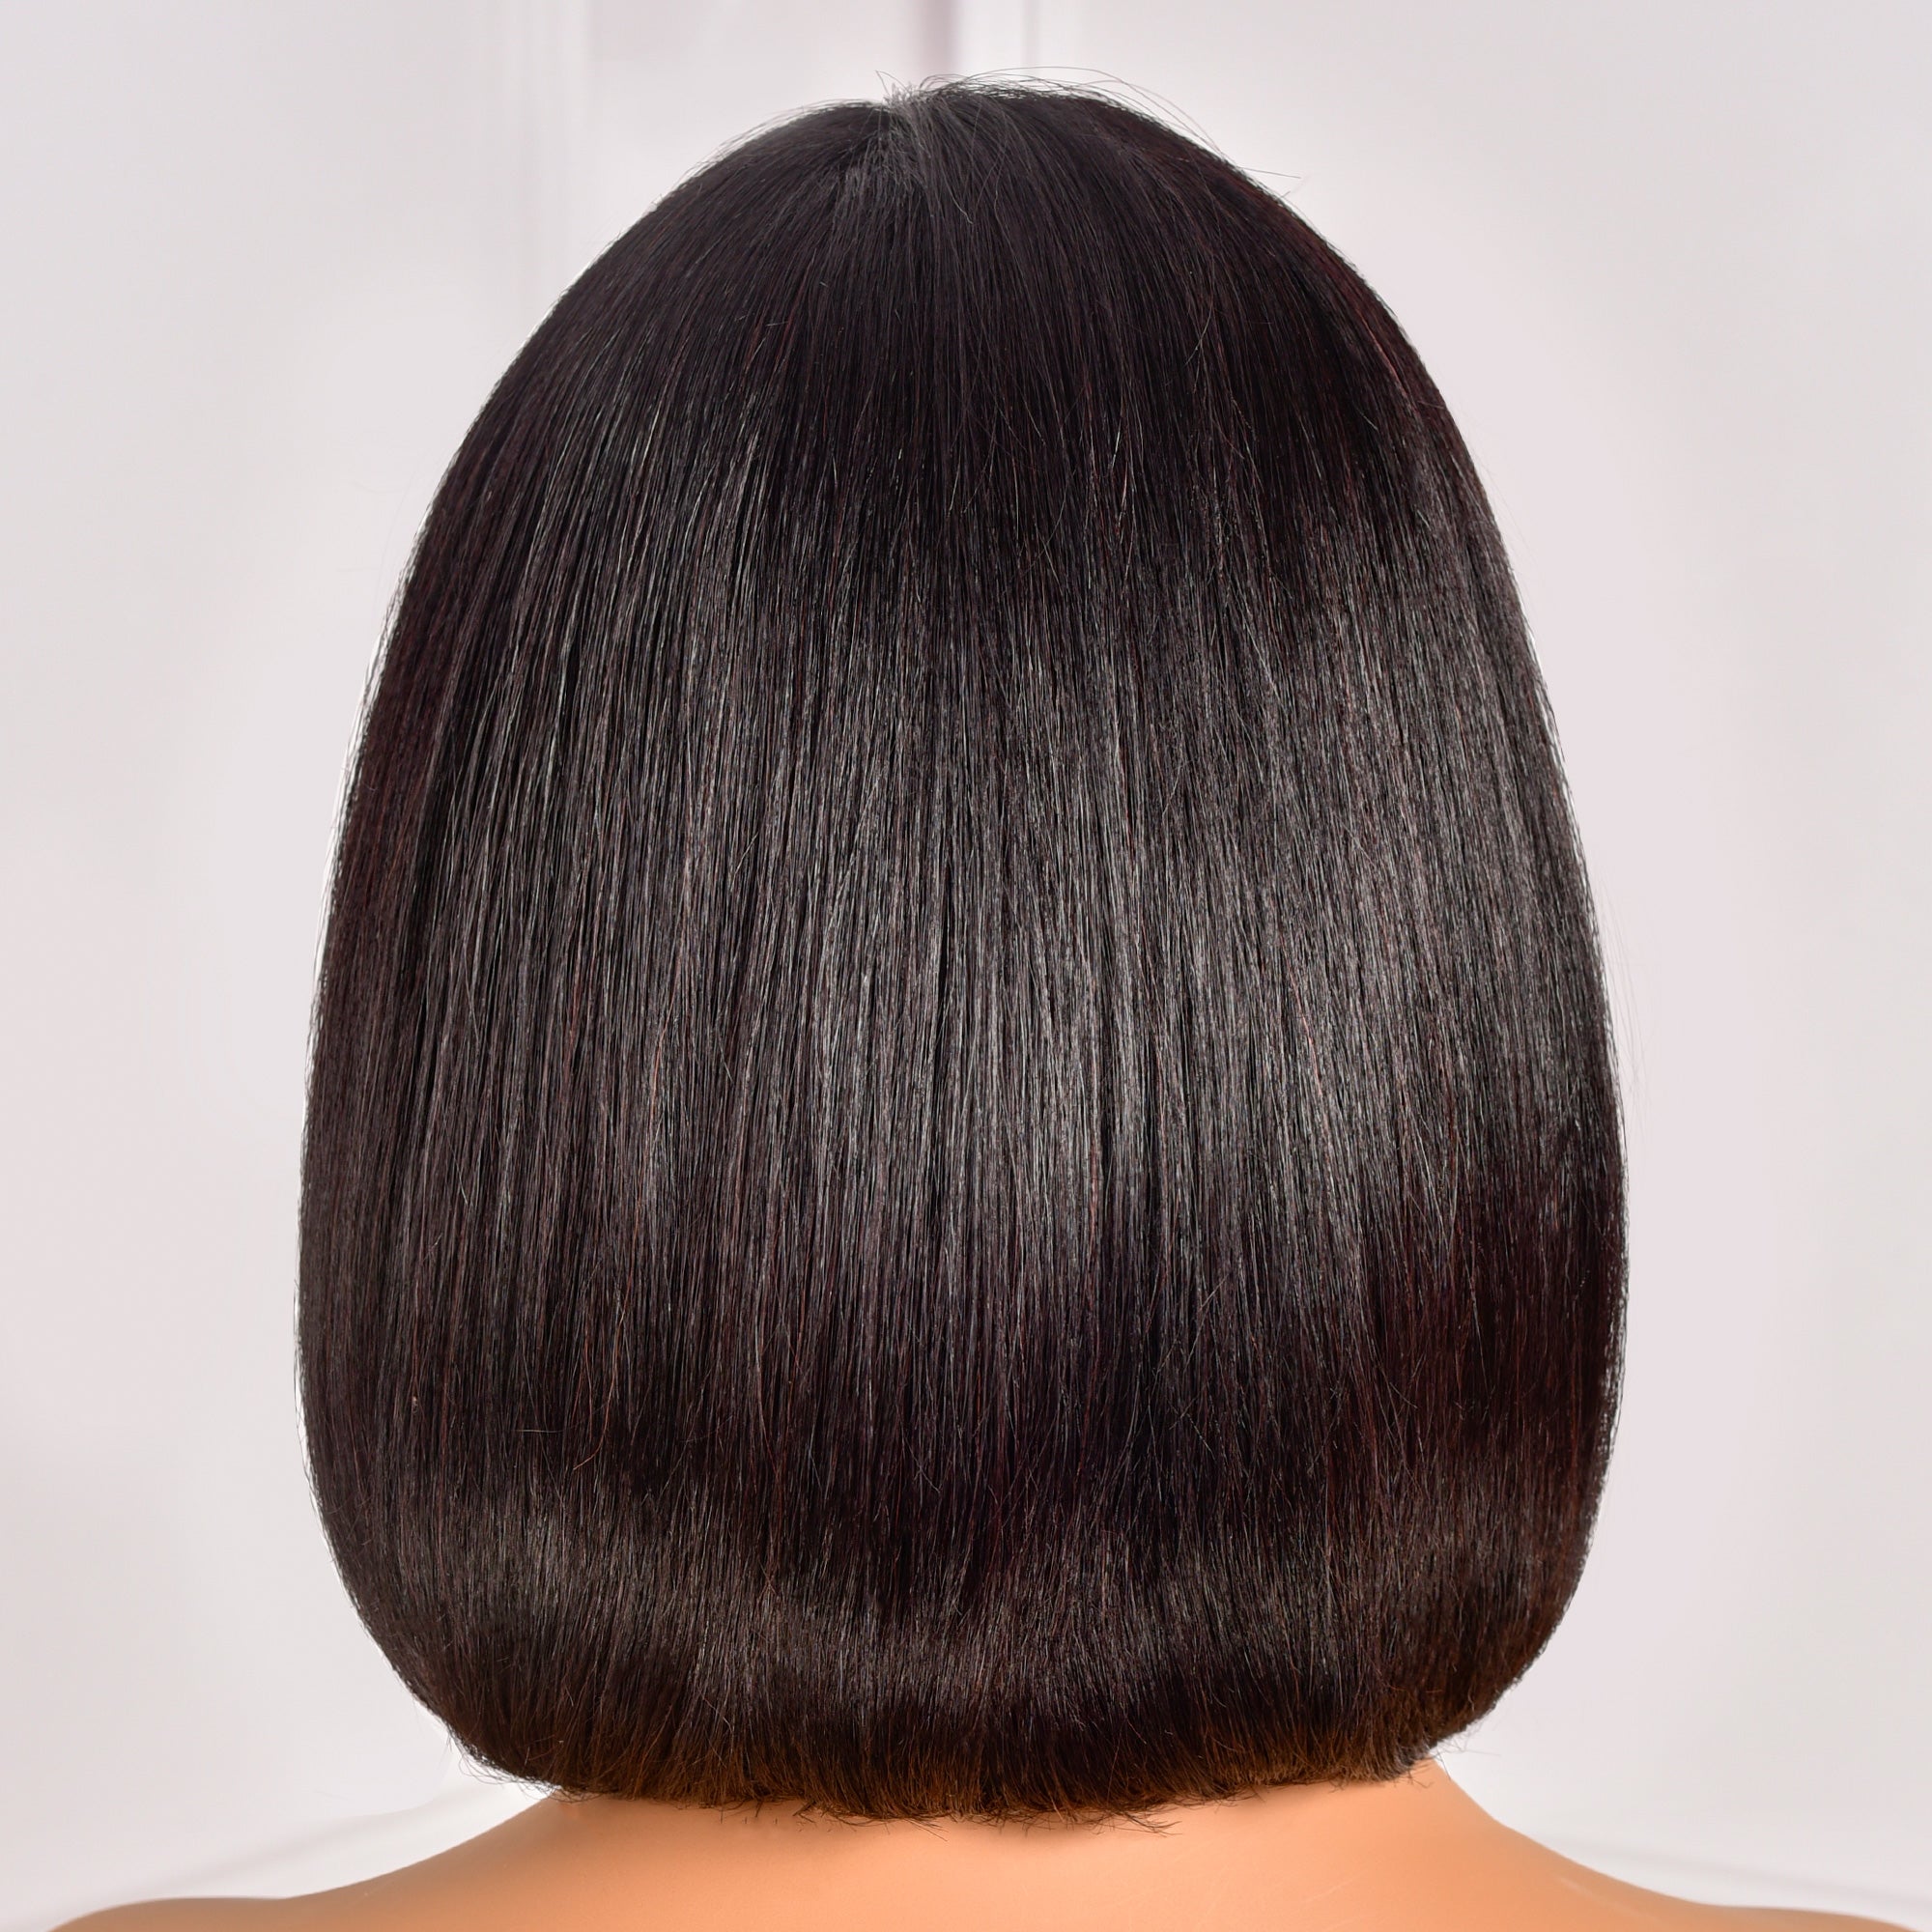 Toyotress Human Hair Bob Wigs - 10 Inch Blunt Cut Short Black Bob Wigs With Bangs, Light Yaki Straight Realistic Look HD Invisible 13*4 T-Part long Lace Glueless 100% Brazilian Virgin Hair Wigs (LF0922H)